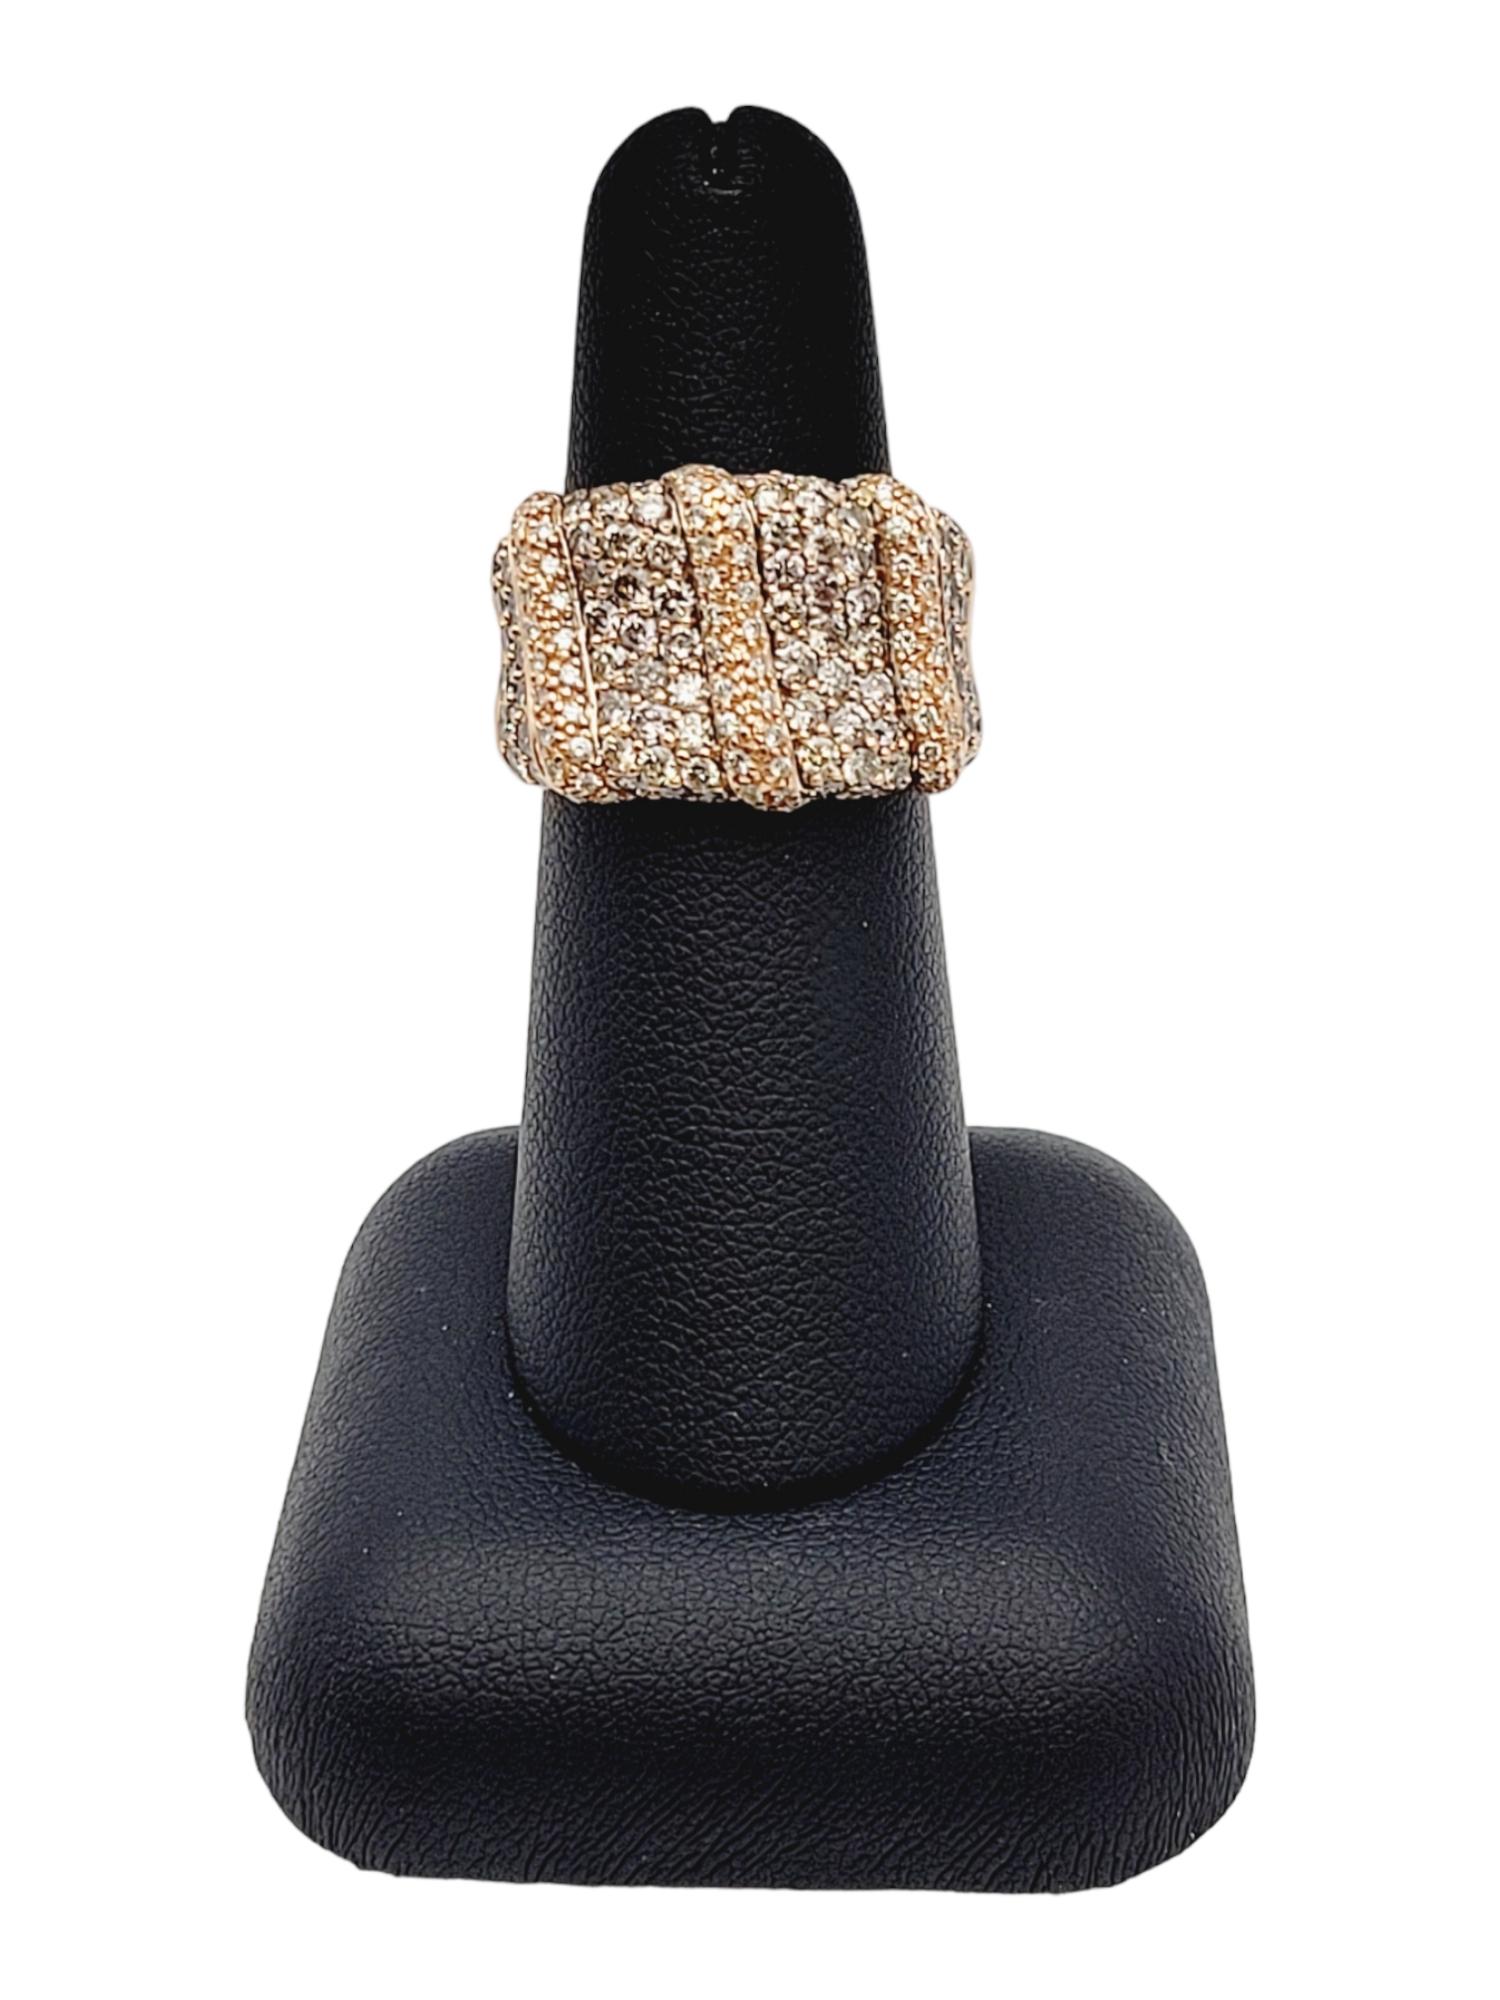 2.14 Carat Light Brown Diamond Pave Band Ring in Polished 14 Karat Rose Gold For Sale 5